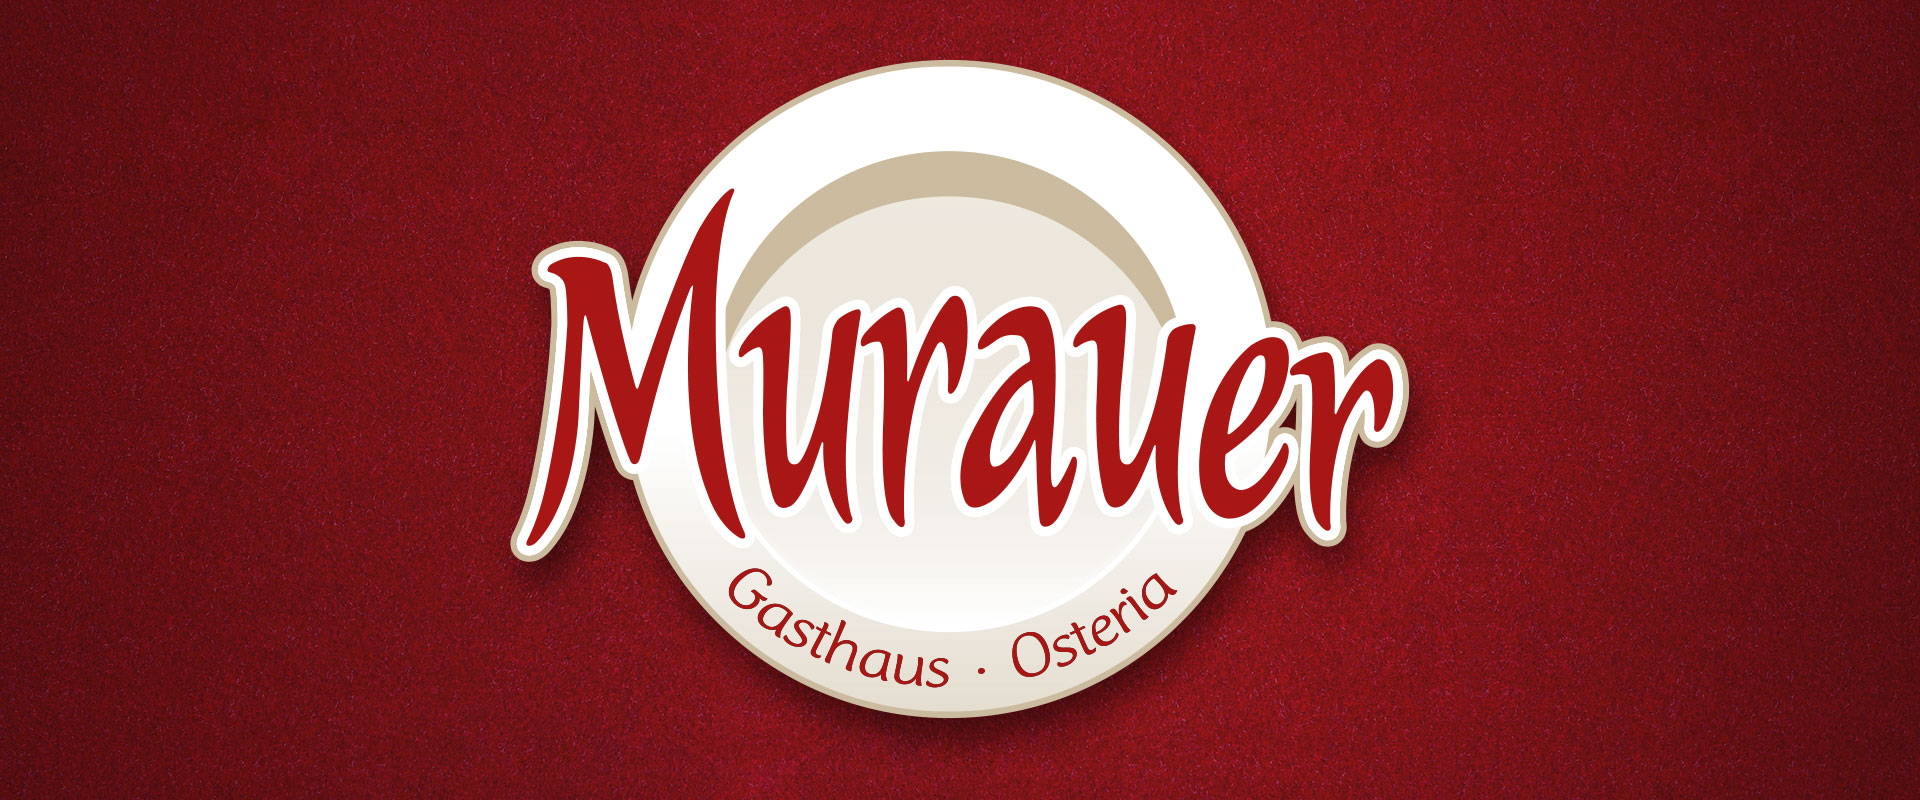 Murauer Gasthaus-Osteria Full Service